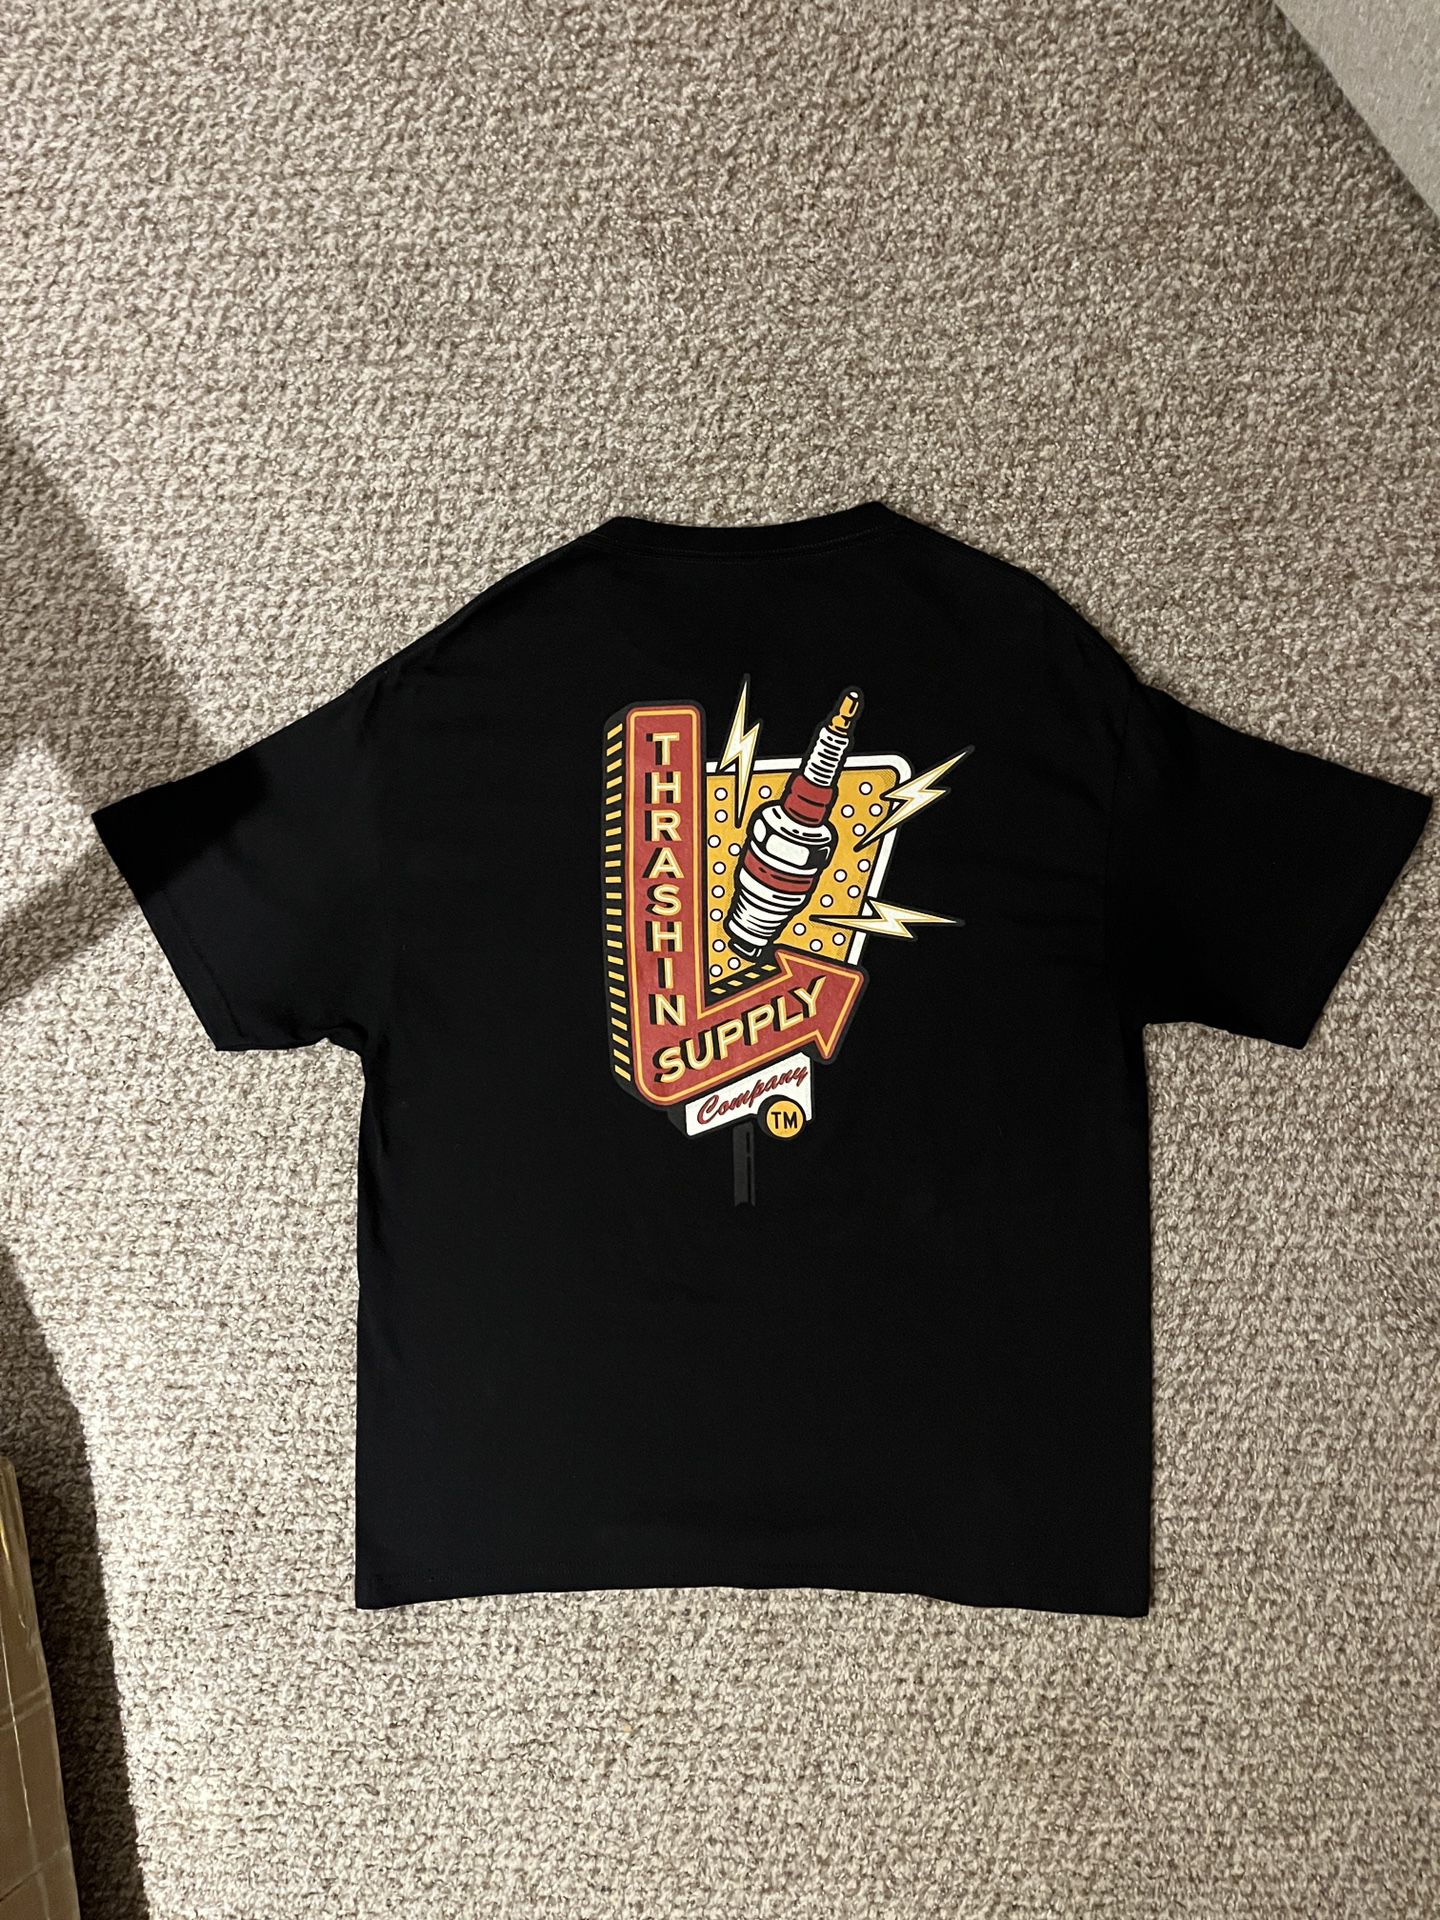 Thrashin Supply “Sign” Harley Davidson Motorcycles Men’s Graphic / Logo T Shirt (Size XL)